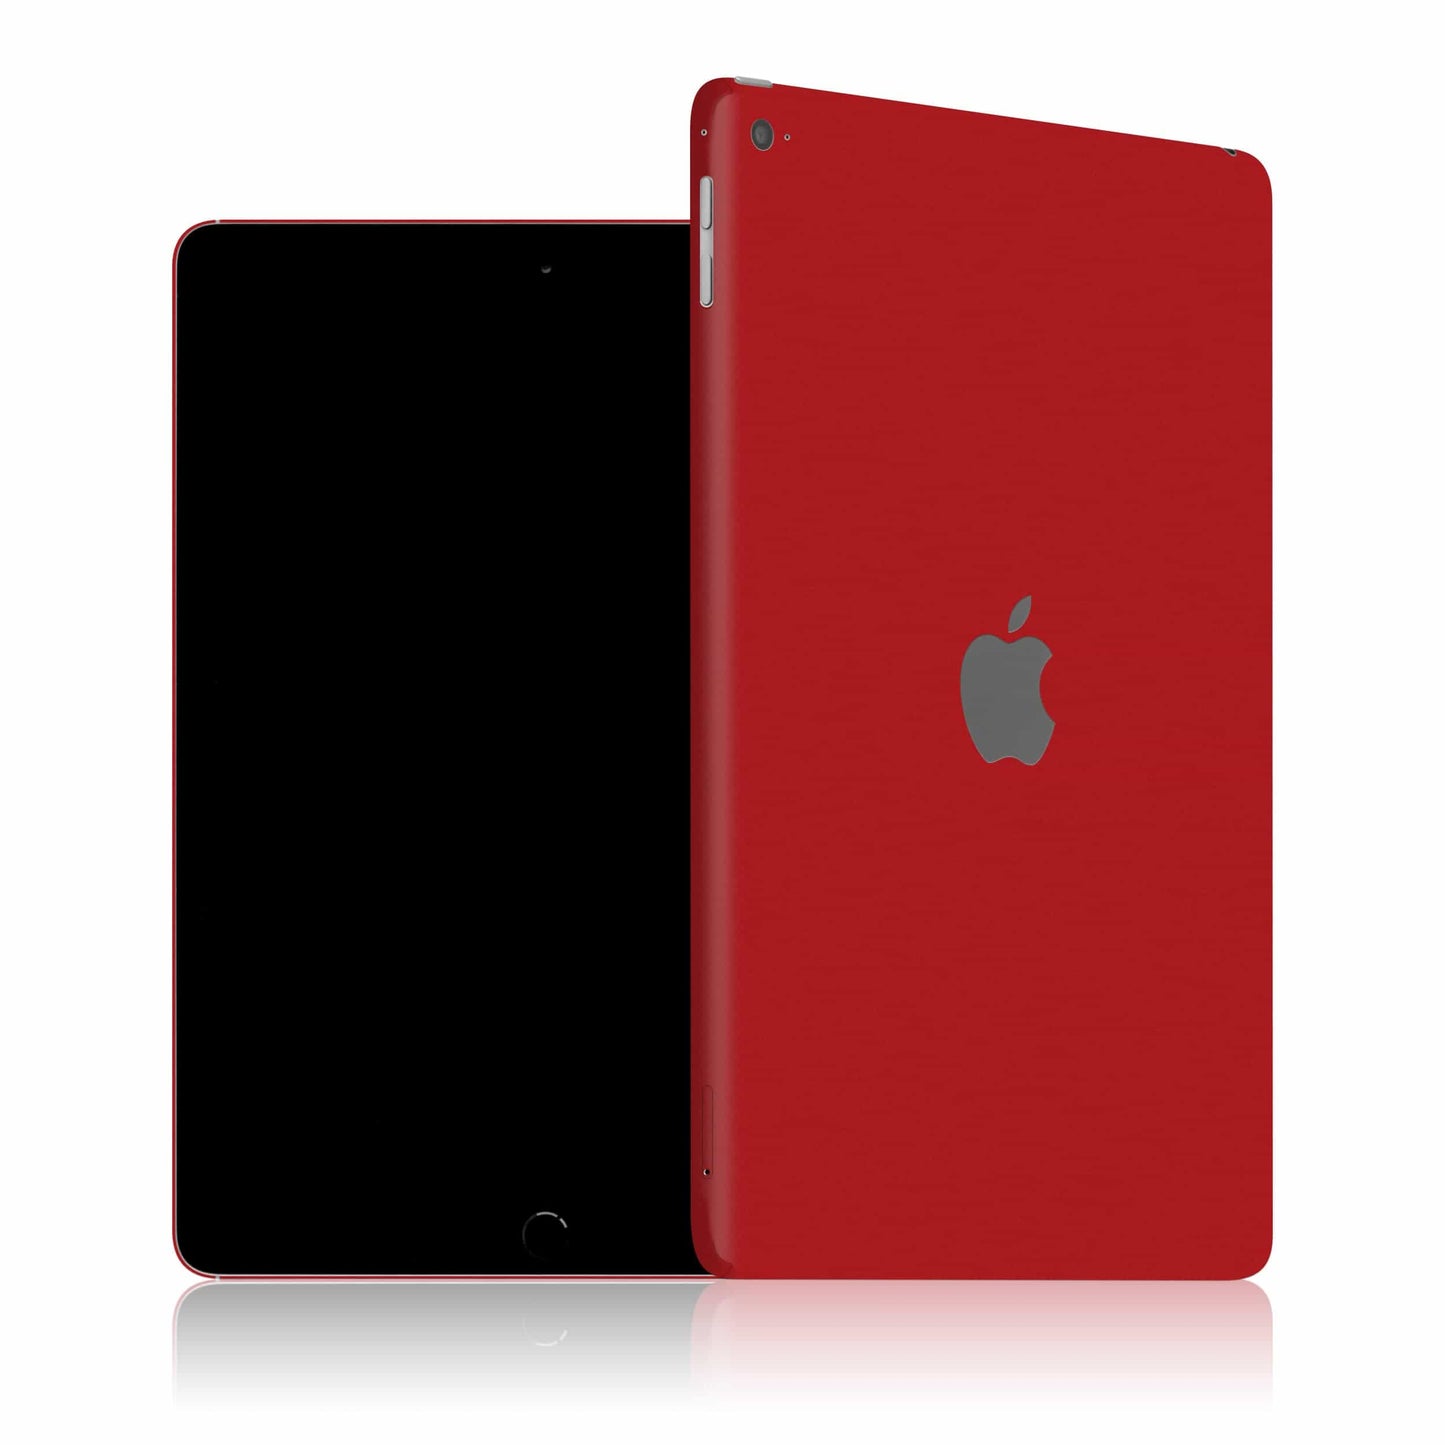 iPad Air 2 - Color Edition